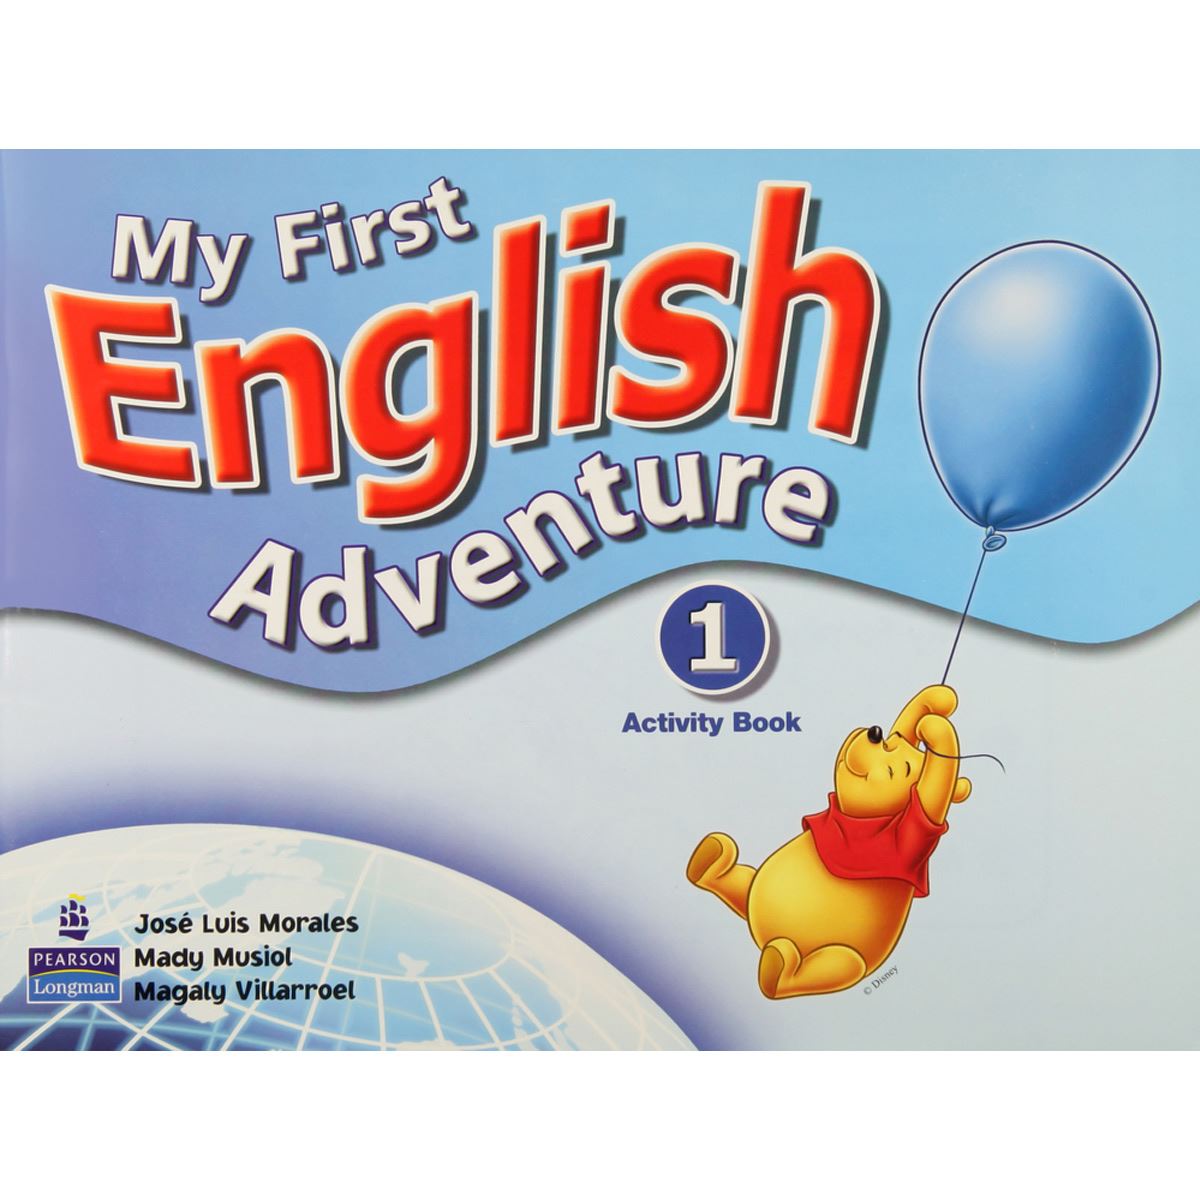 My First English Adventure 1 Wb (Version Americana)